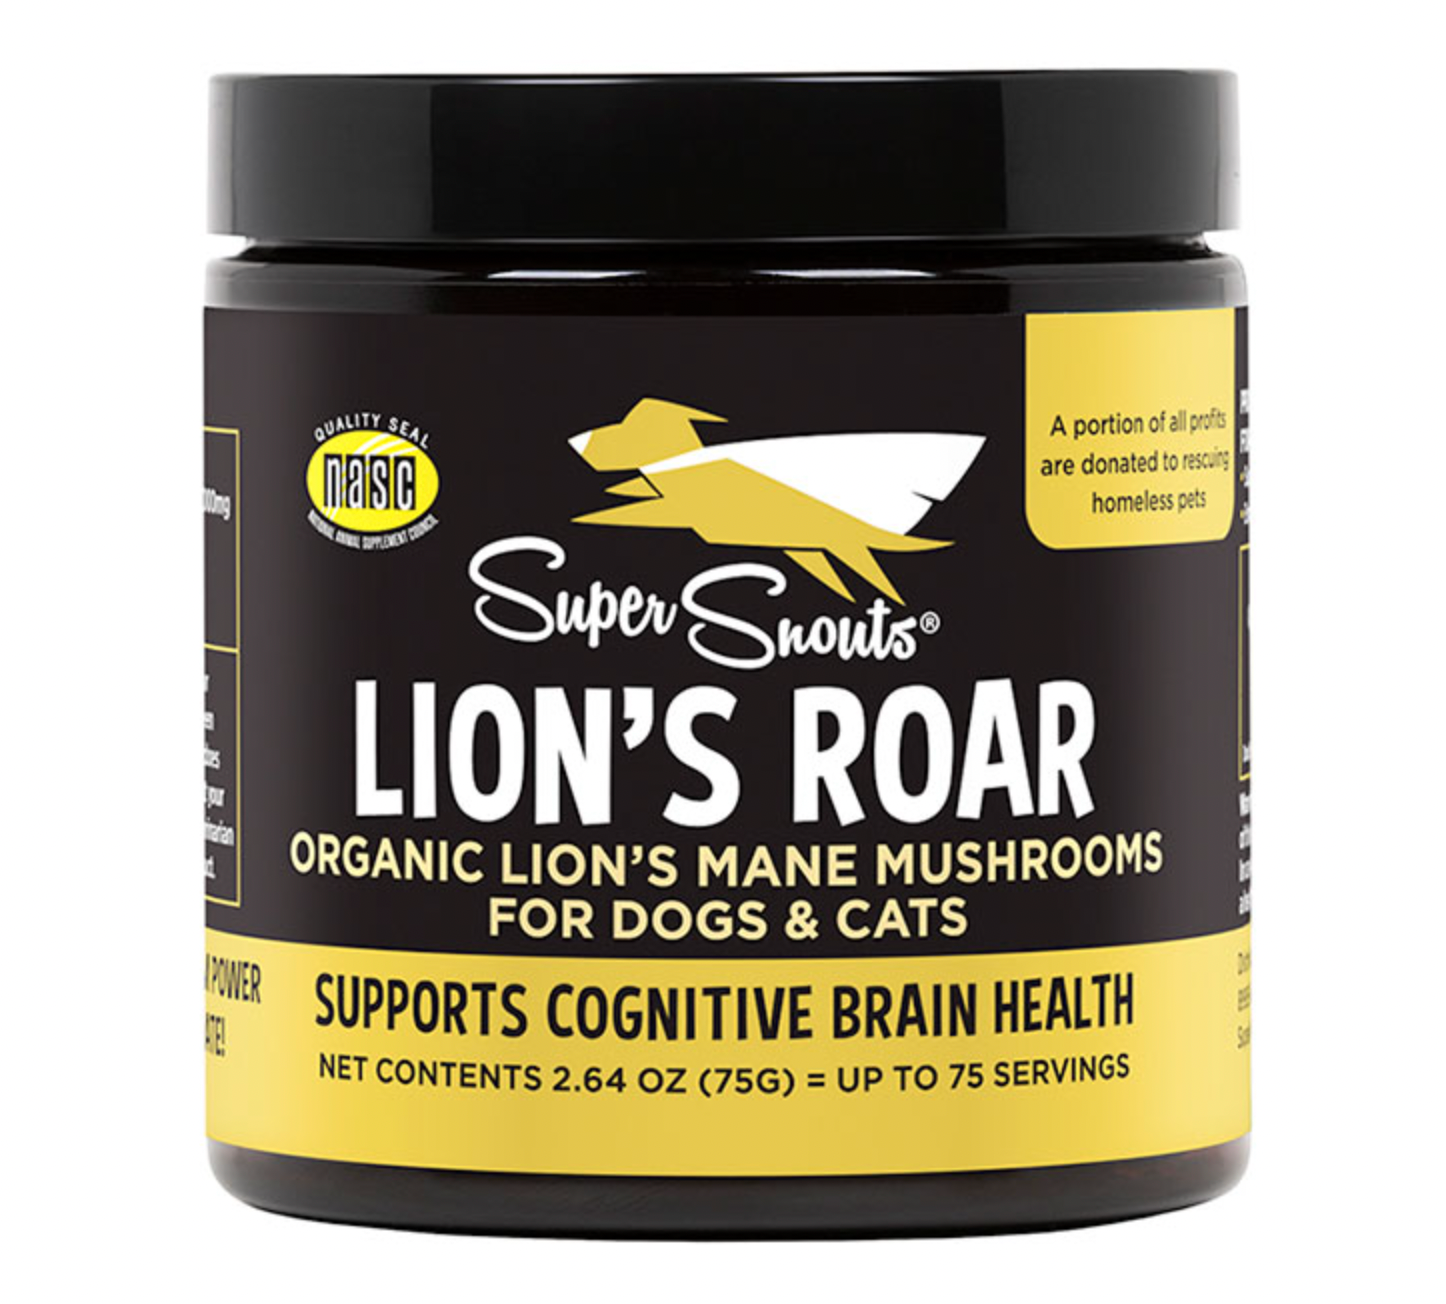 Super Snouts "Lions Roar" Mushrooms for Cognitive Support